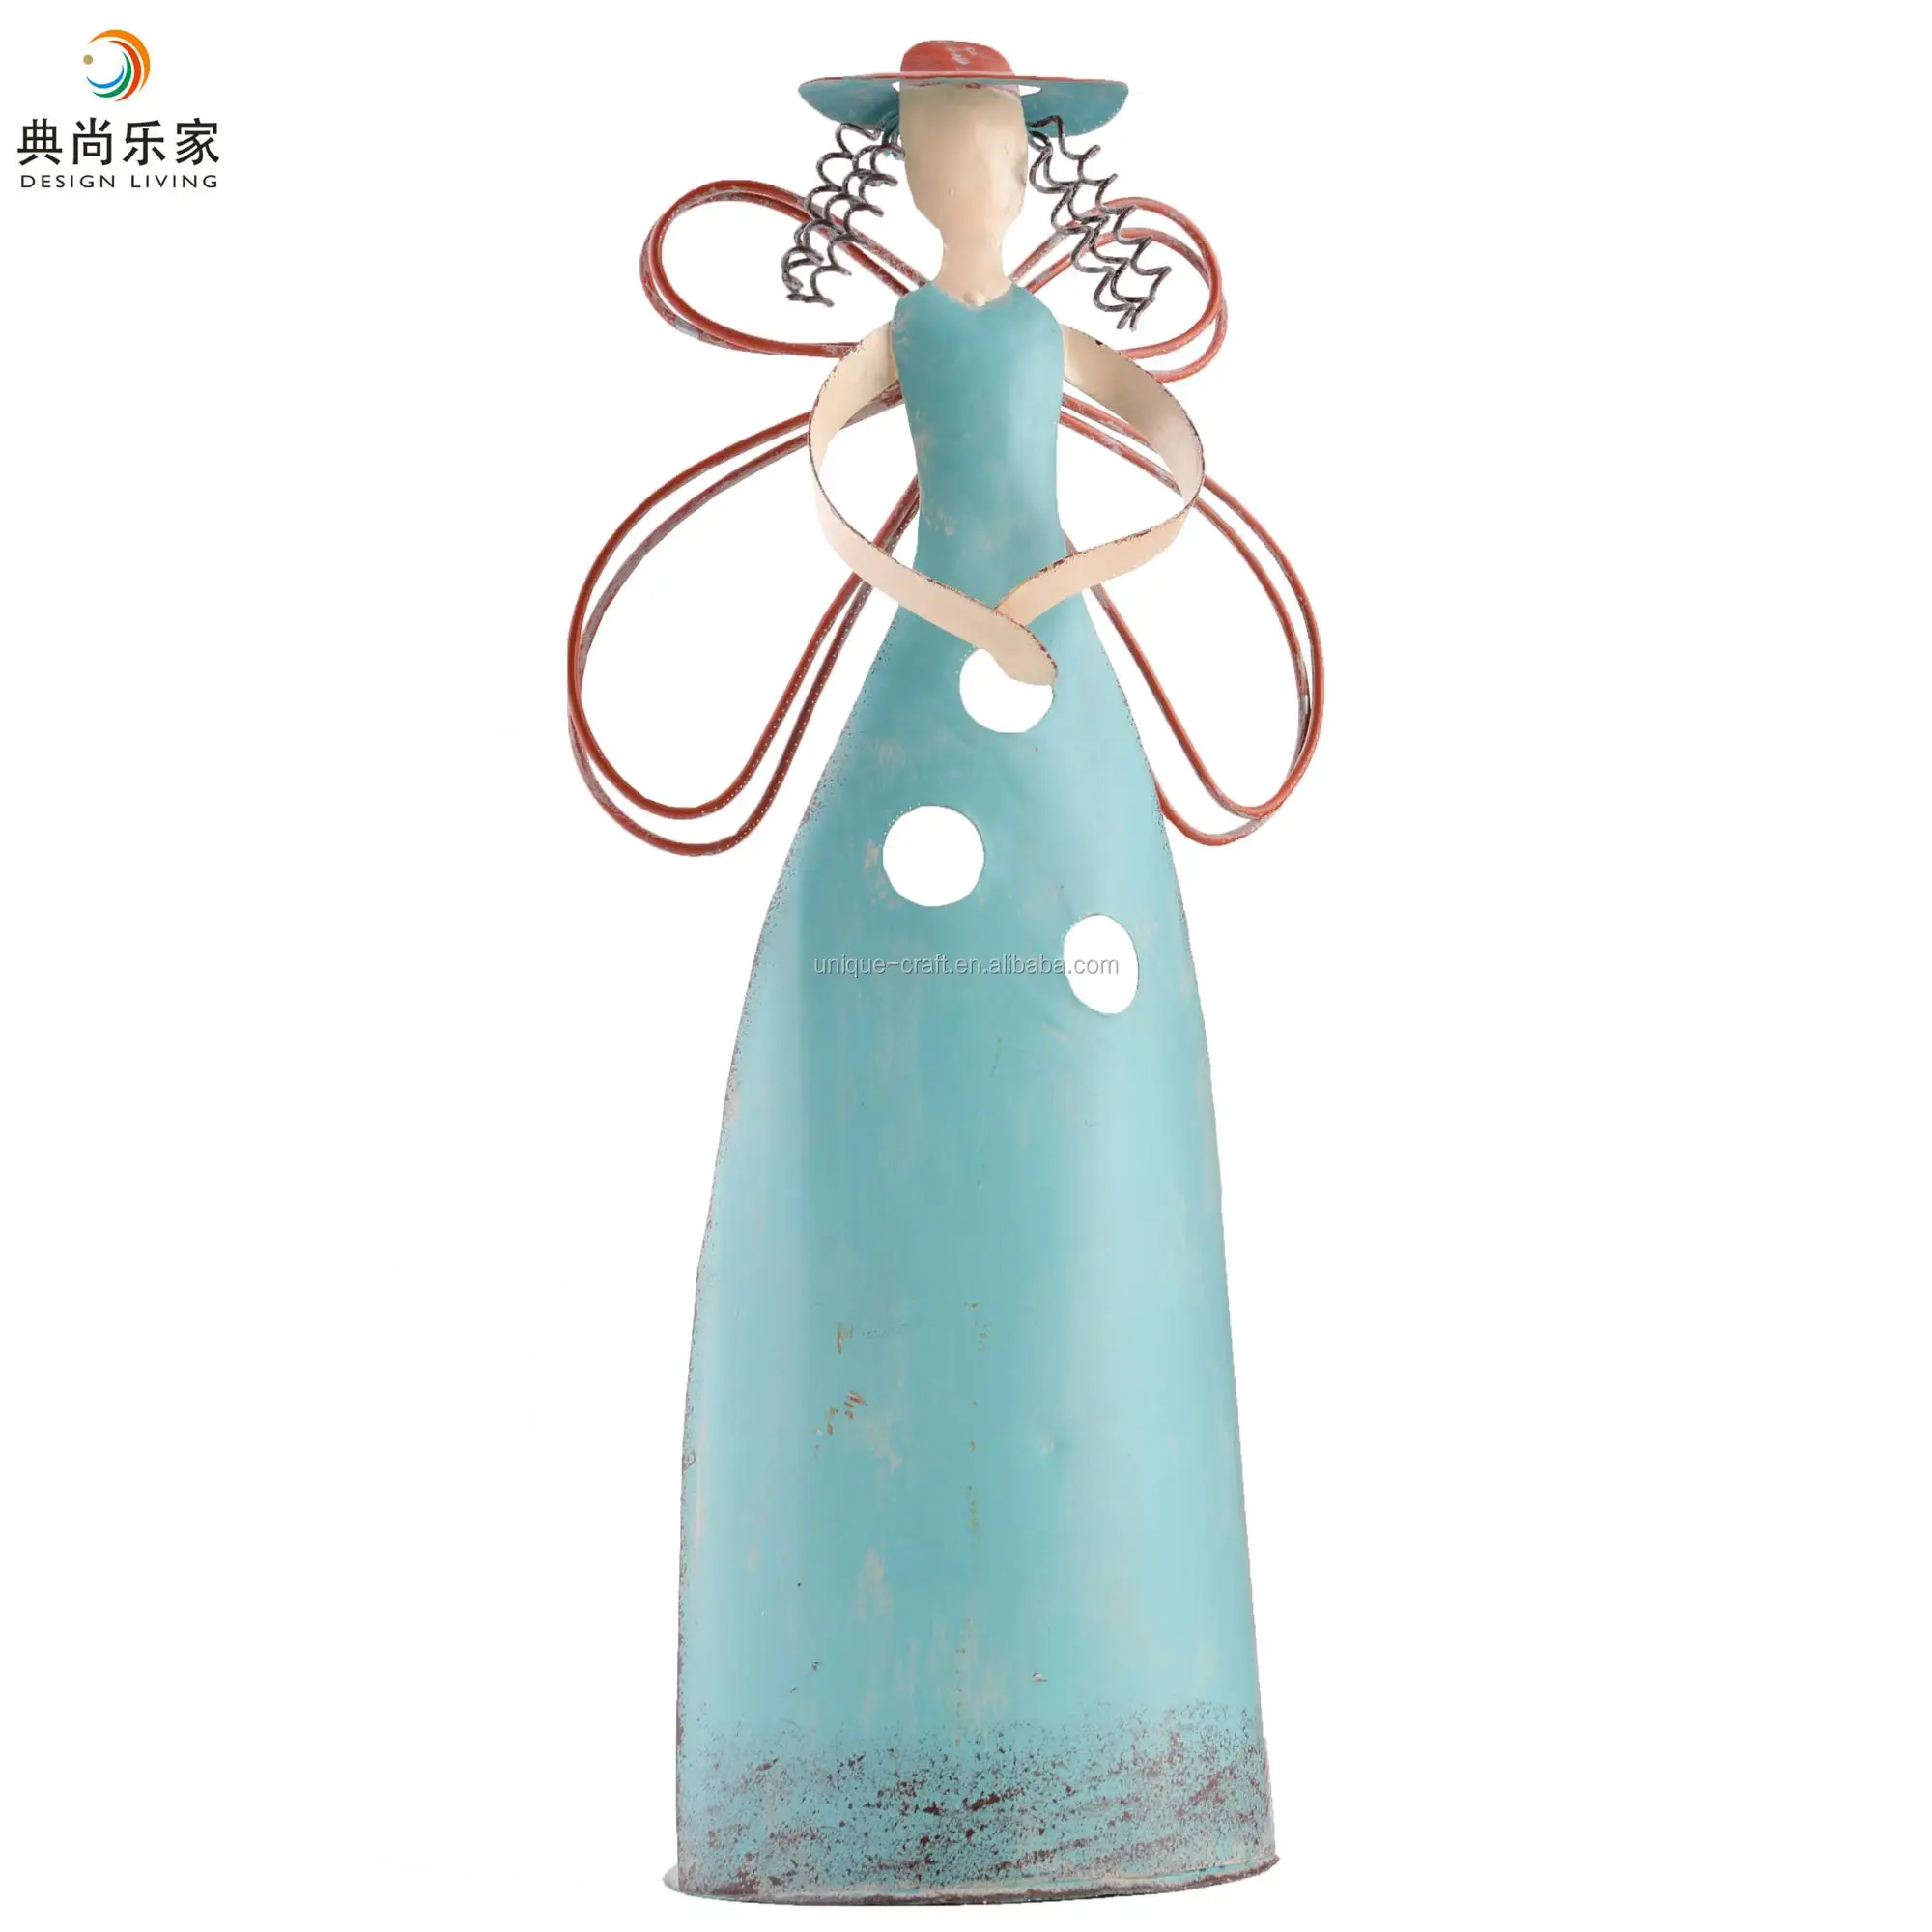 Novelty Lady Shaped Metal Wine Bottle Holder Figurine With Glass Vase